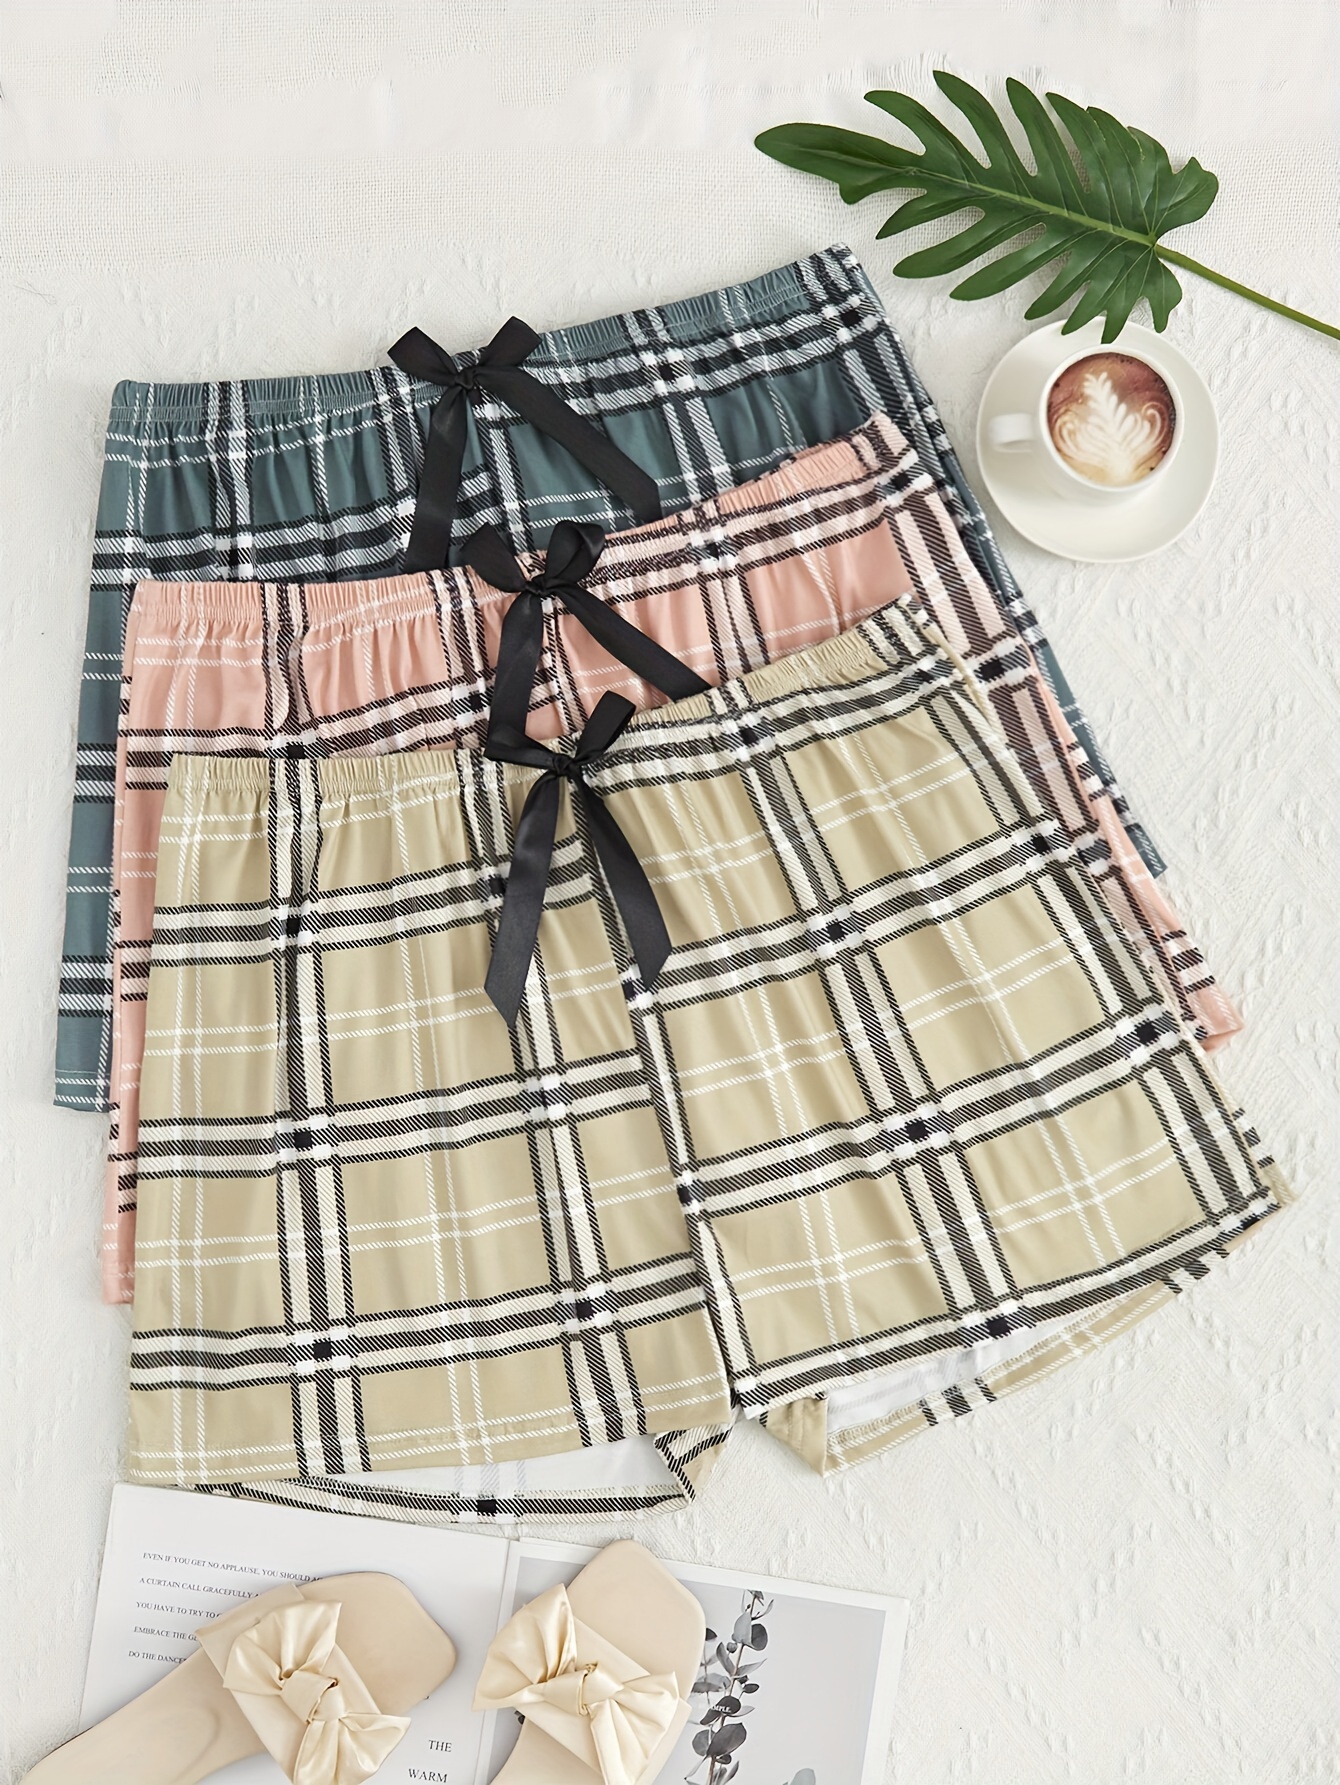 3pcs womens casual sleepwear bottoms plus size plaid print bow decor elastic waist lounge shorts